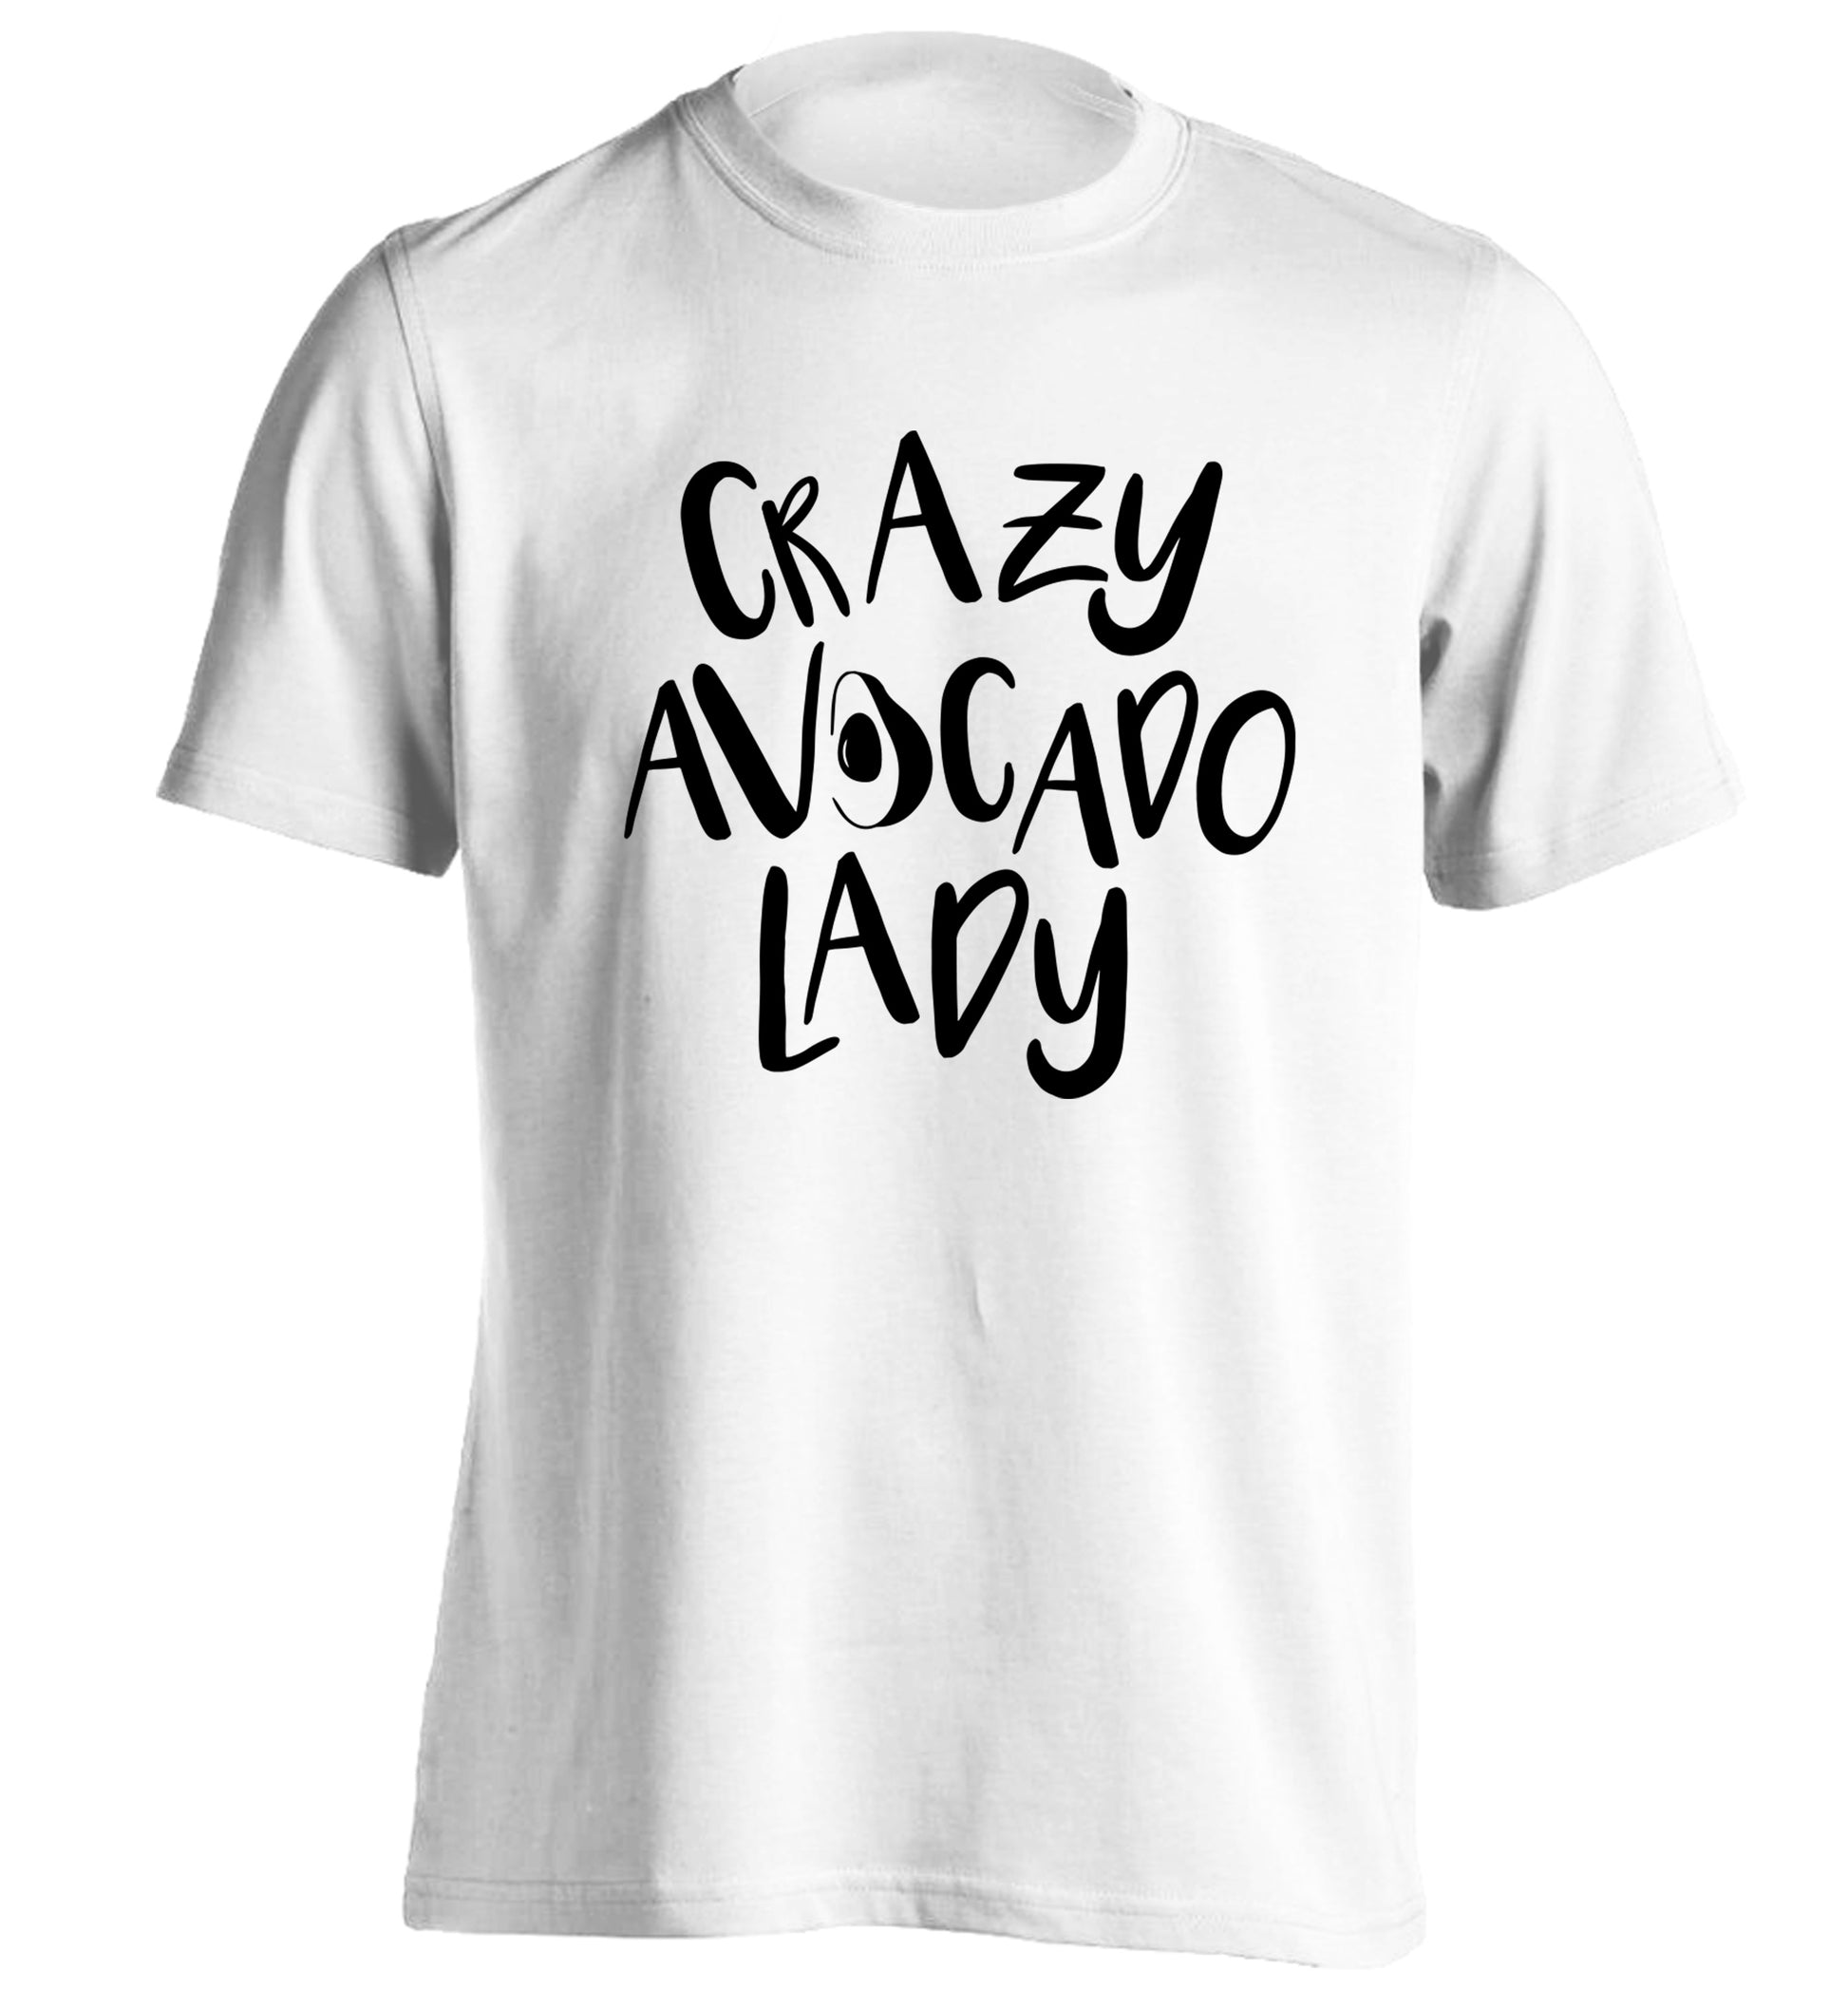 Crazy avocado lady adults unisex white Tshirt 2XL